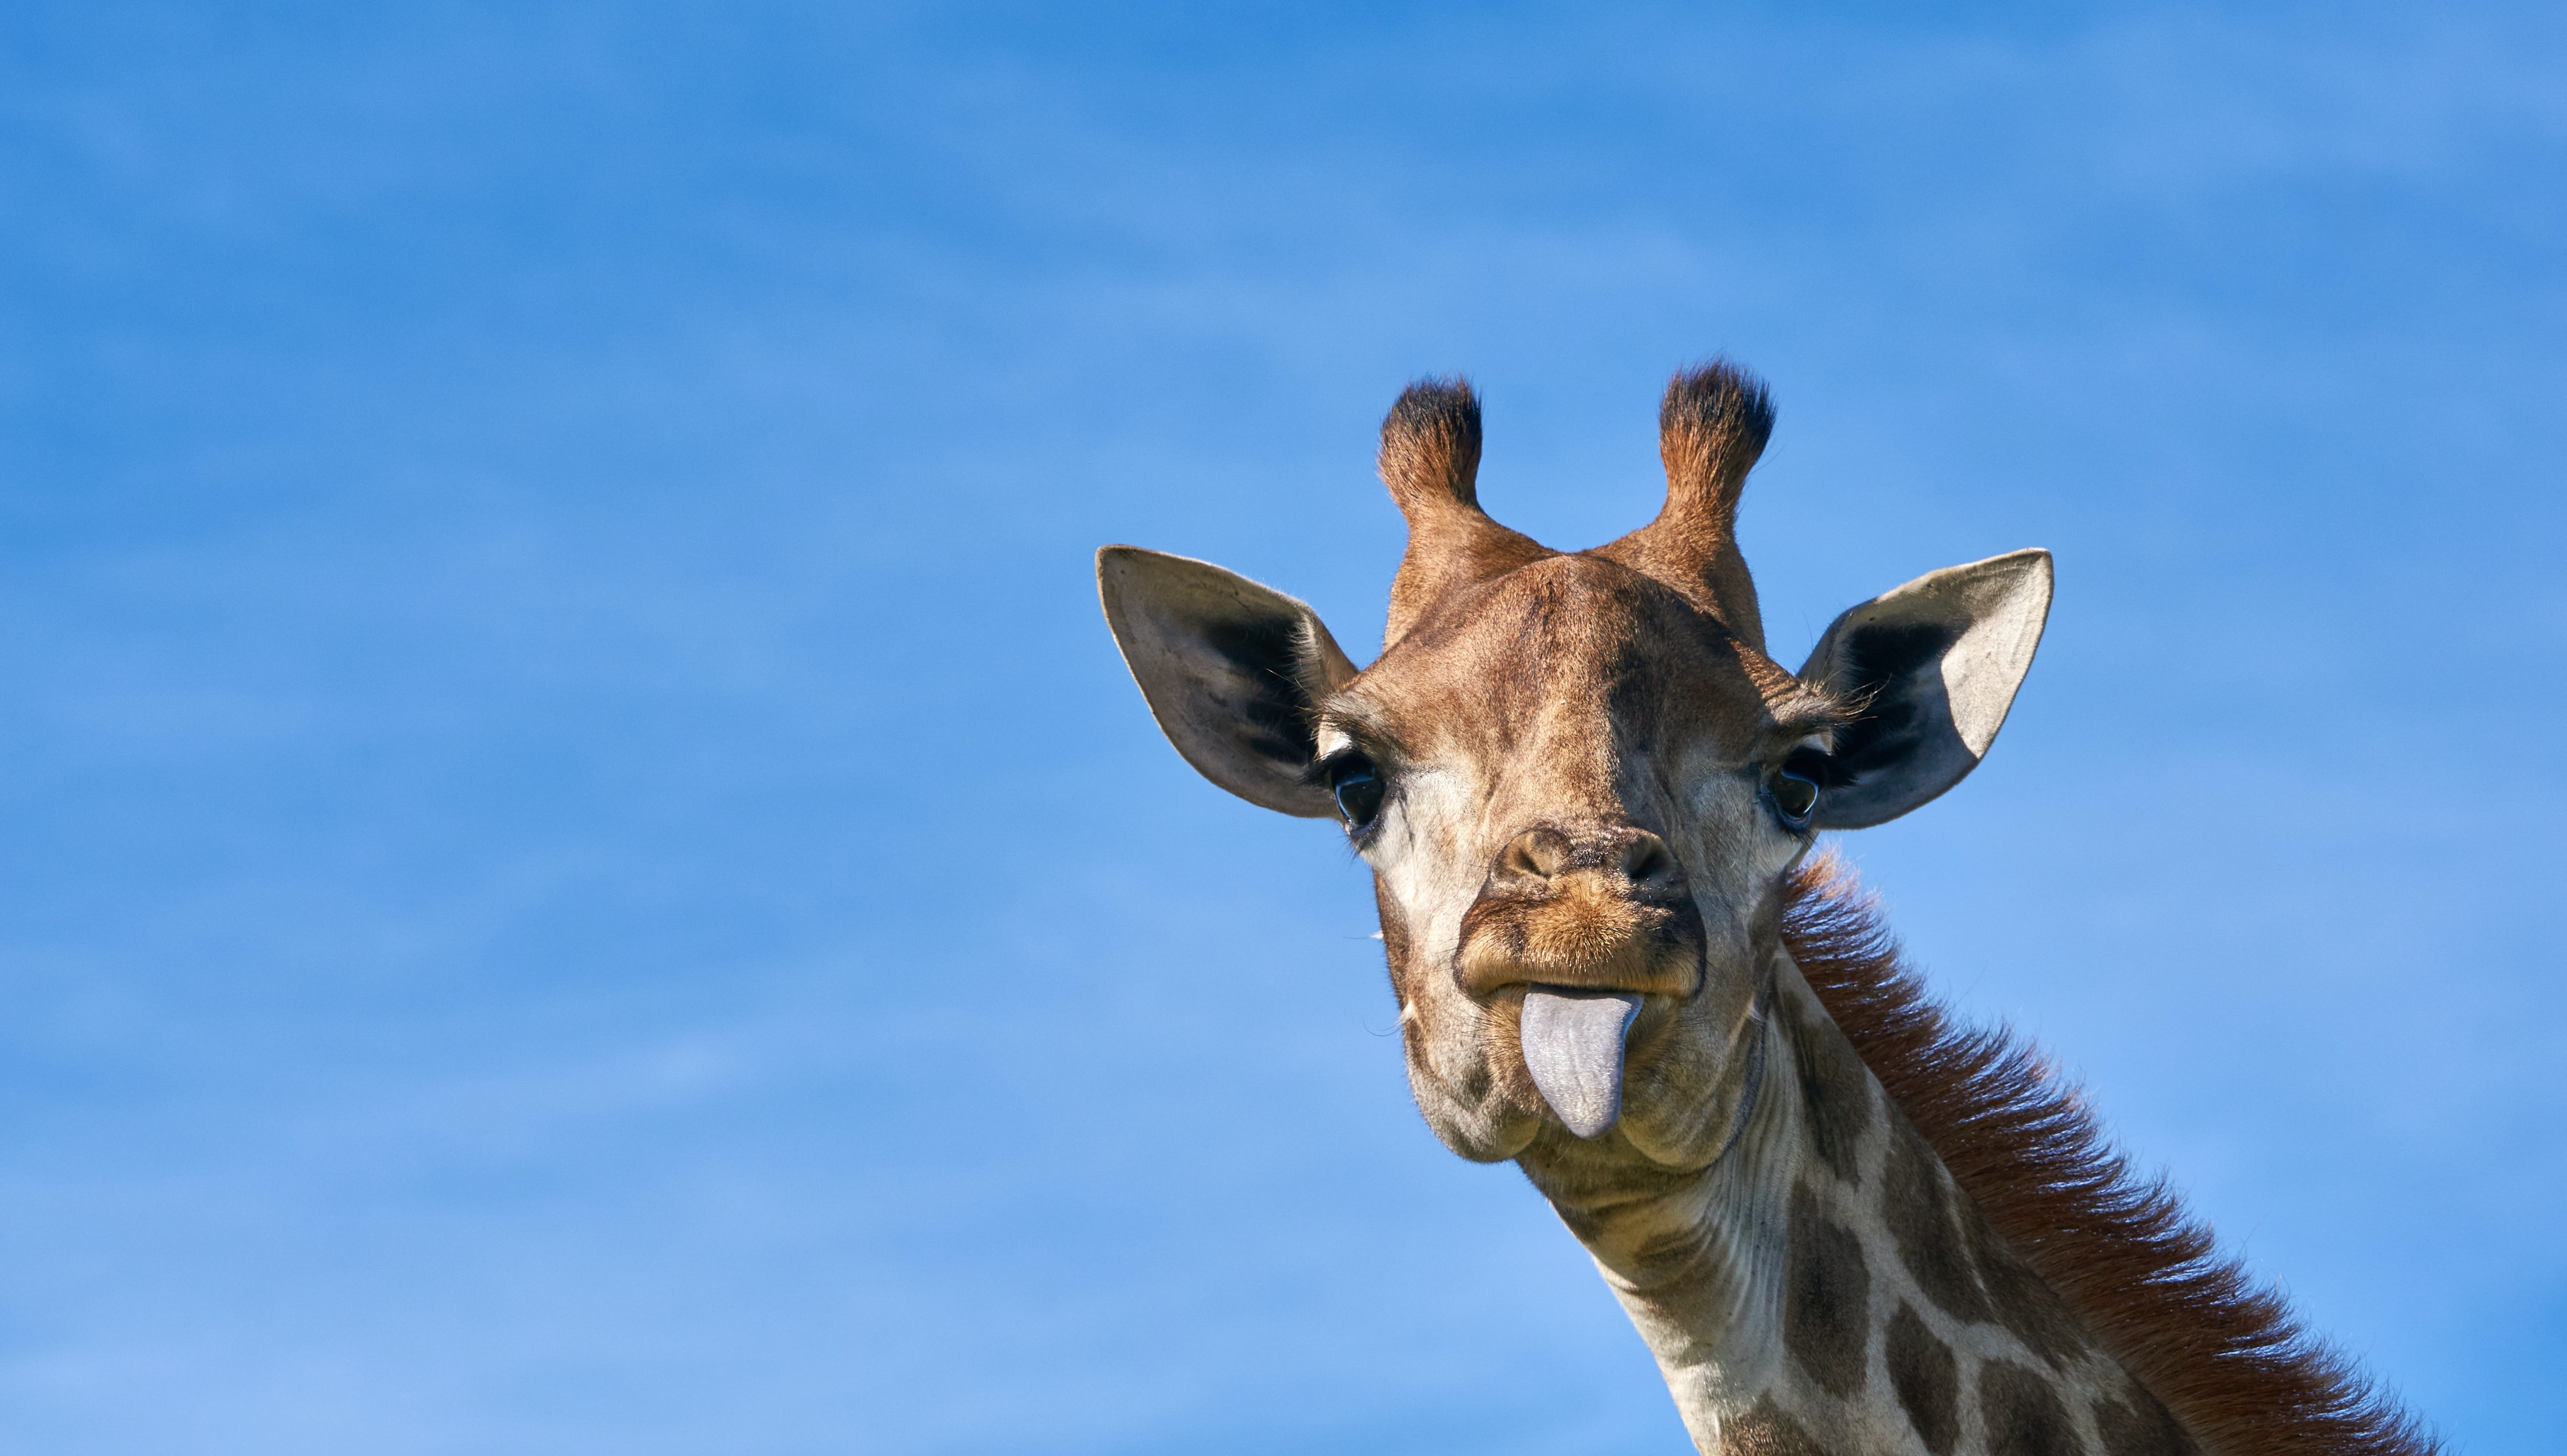 Today is World Giraffe Day!